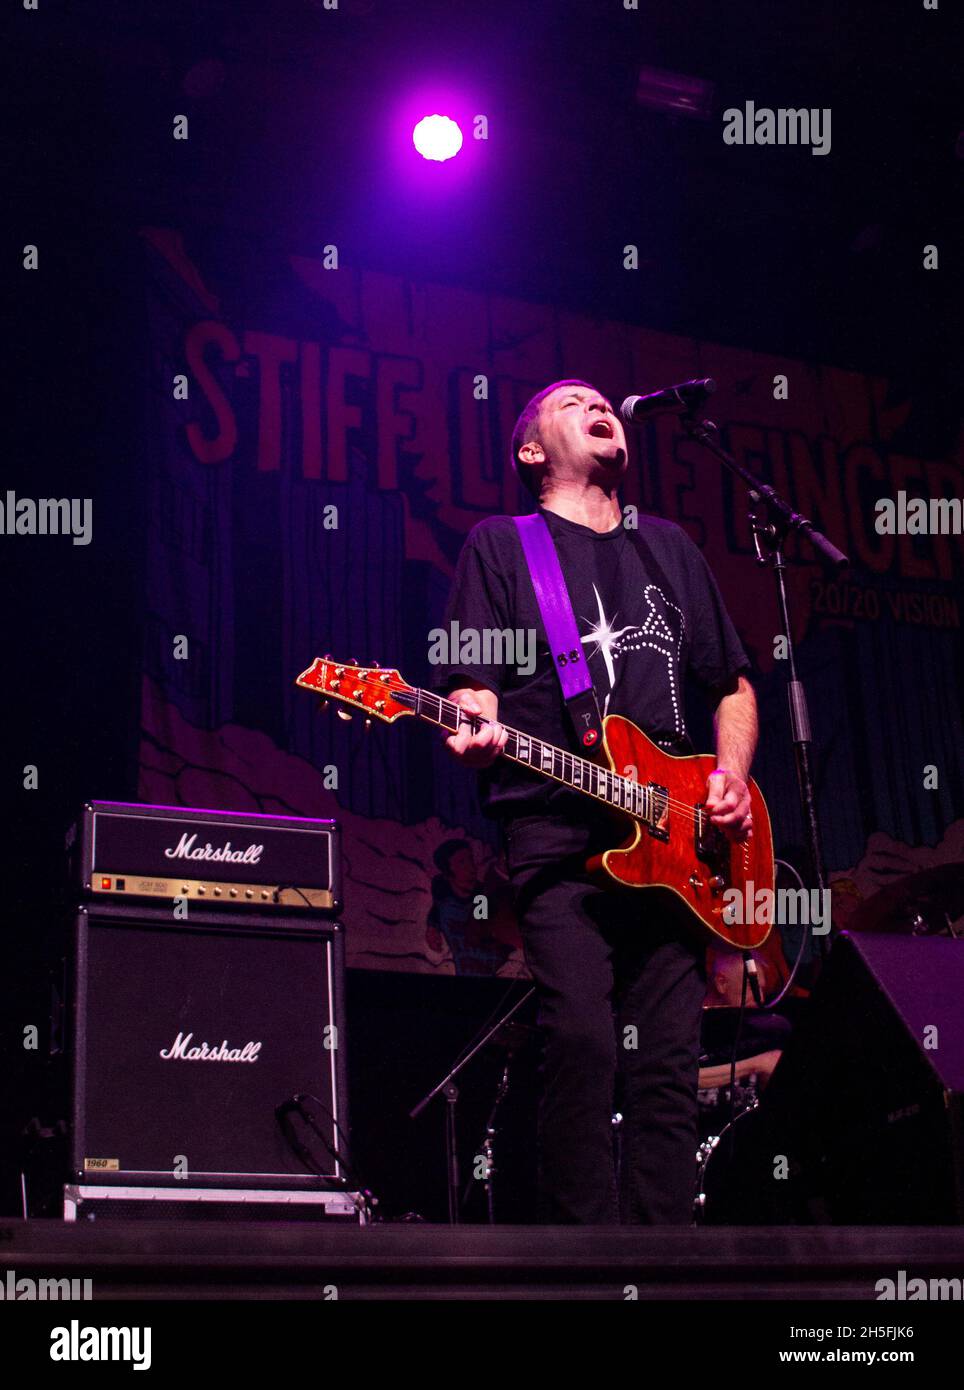 Northern Irish punk rock band Stiff Little Fingers at the Broken Bones Festival in Helsinki, Finland, 6.11.2021.  Ian McCallum, guitarist of the Stiff Little Fingers. Stock Photo